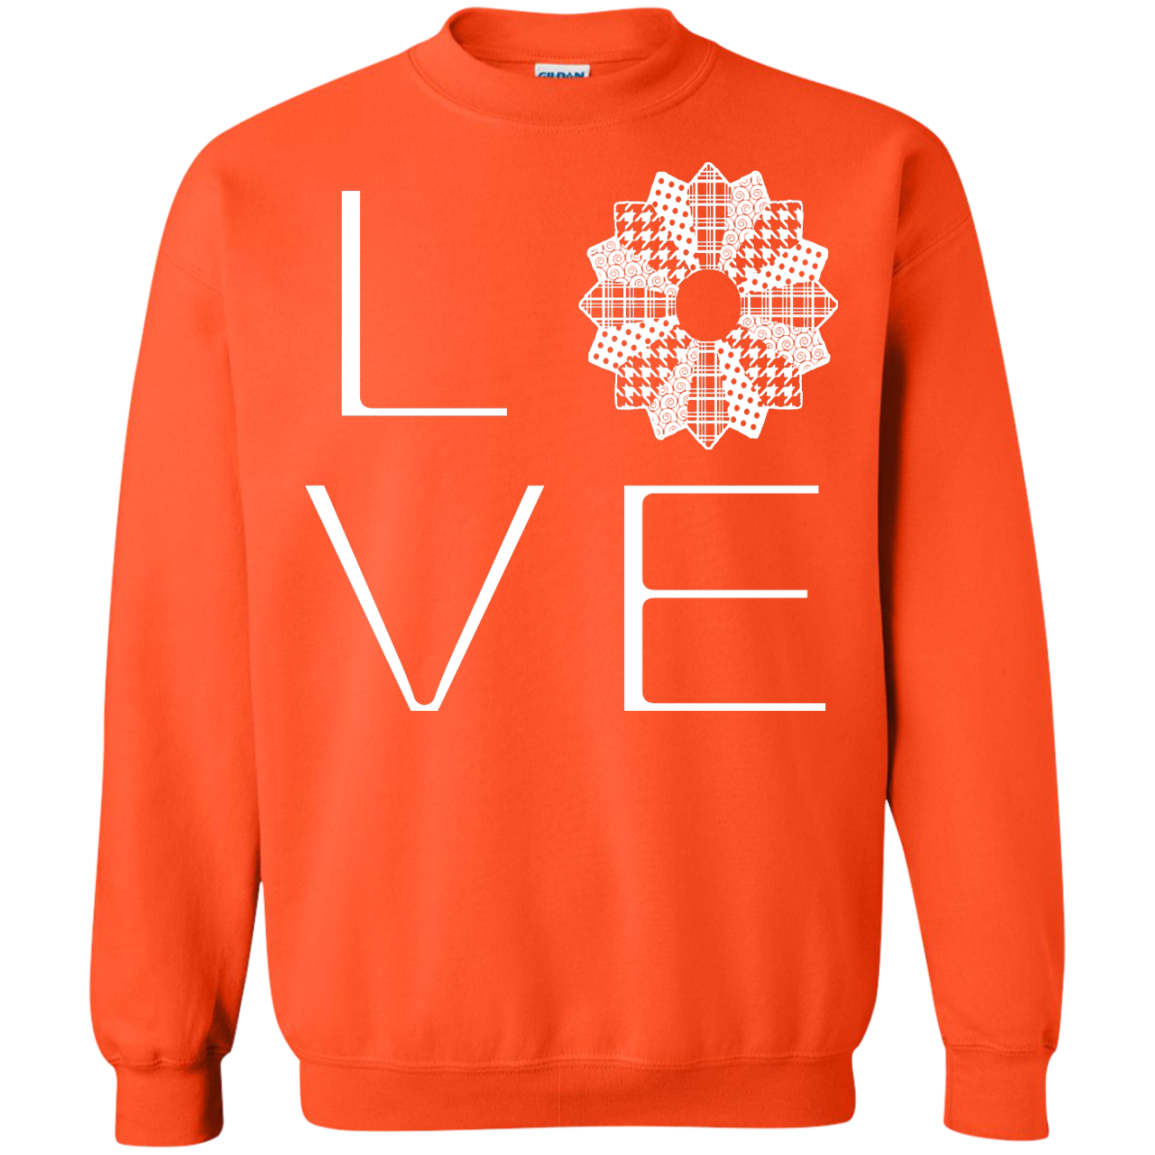 LOVE Quilting Crewneck Sweatshirts - Crafter4Life - 8